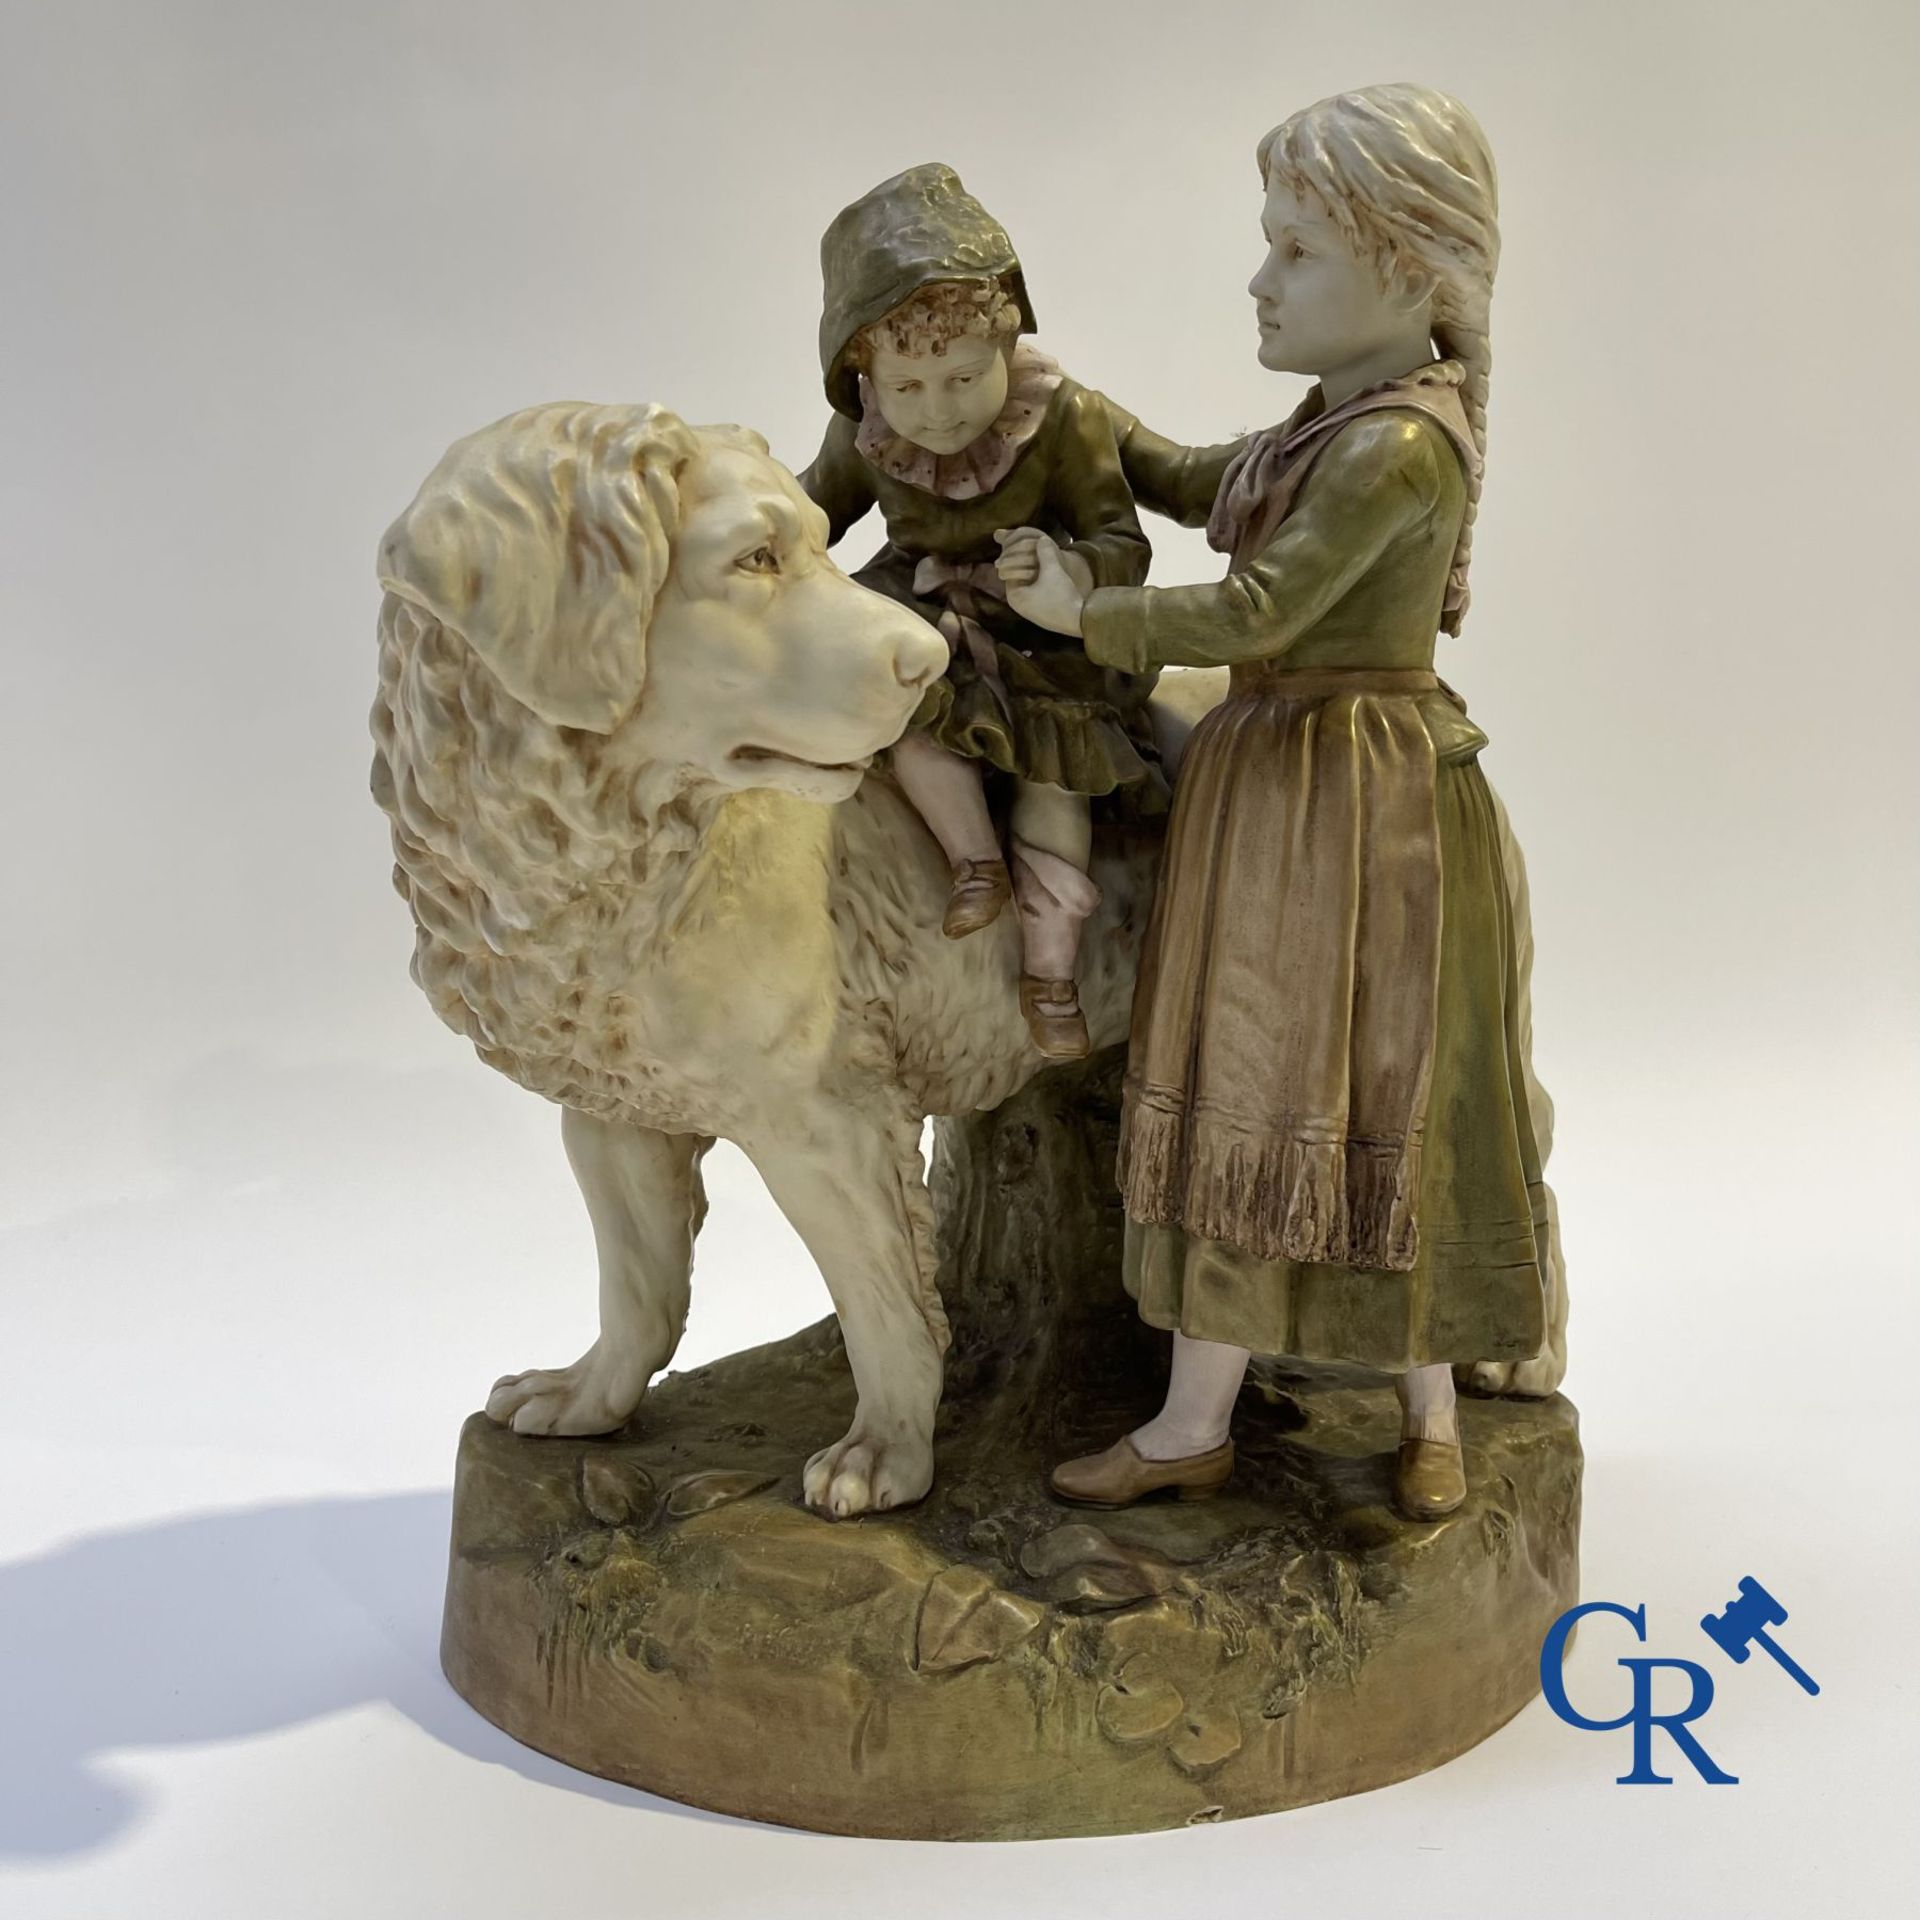 Porcelain: Royal Dux. A polychrome representation of a Saint Bernard dog with children. - Image 2 of 10